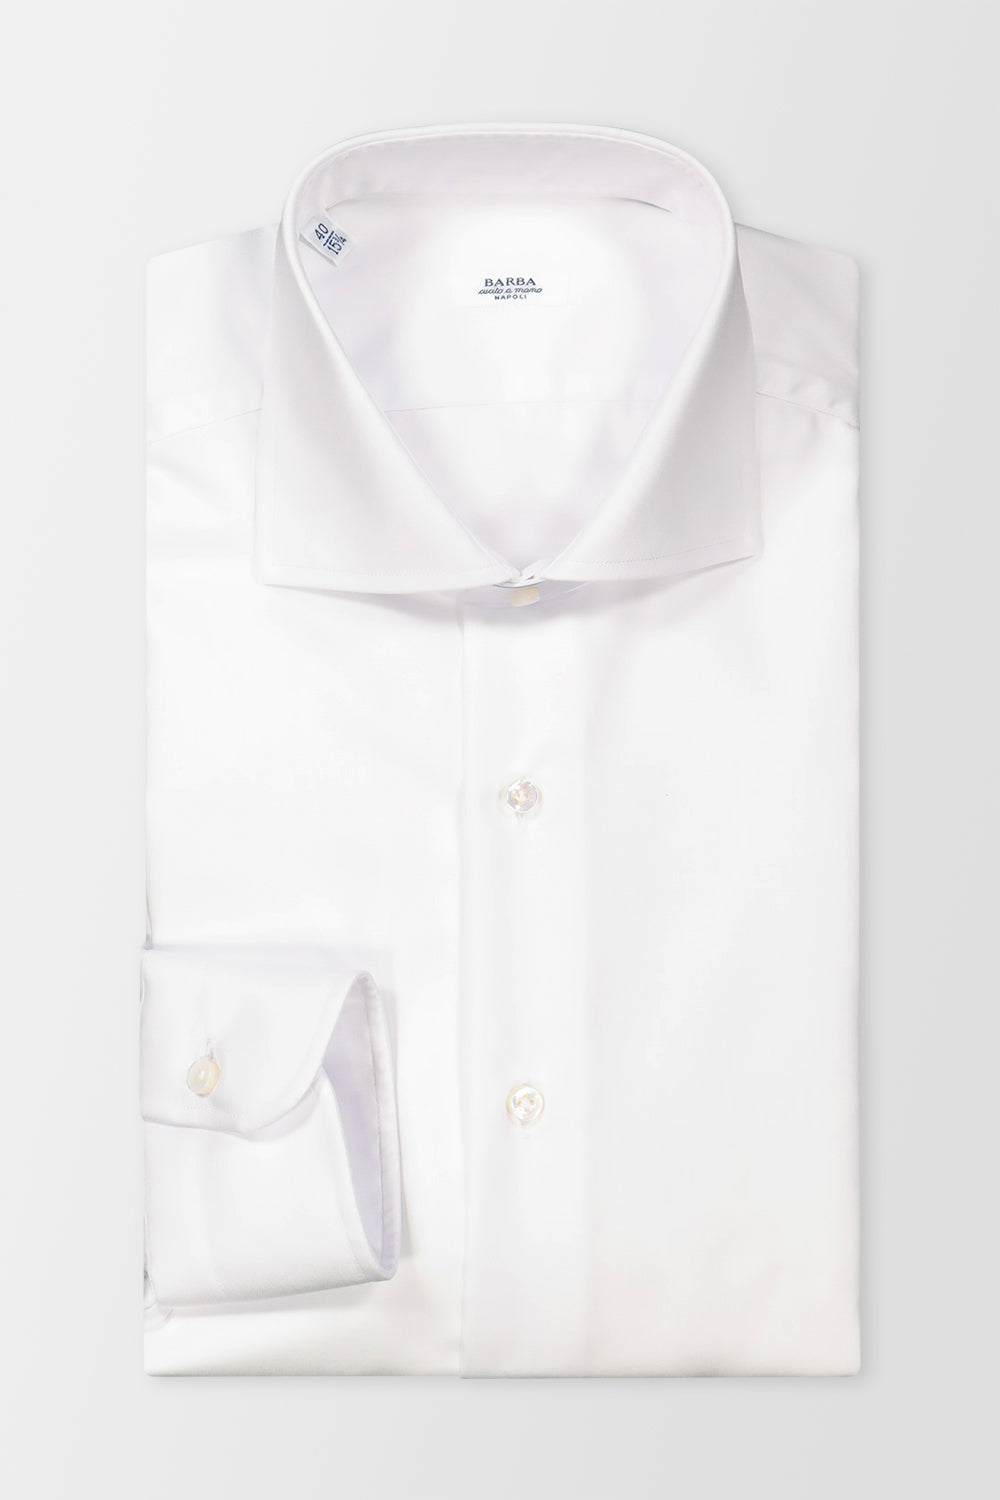 Barba Napoli White Classic Shirt